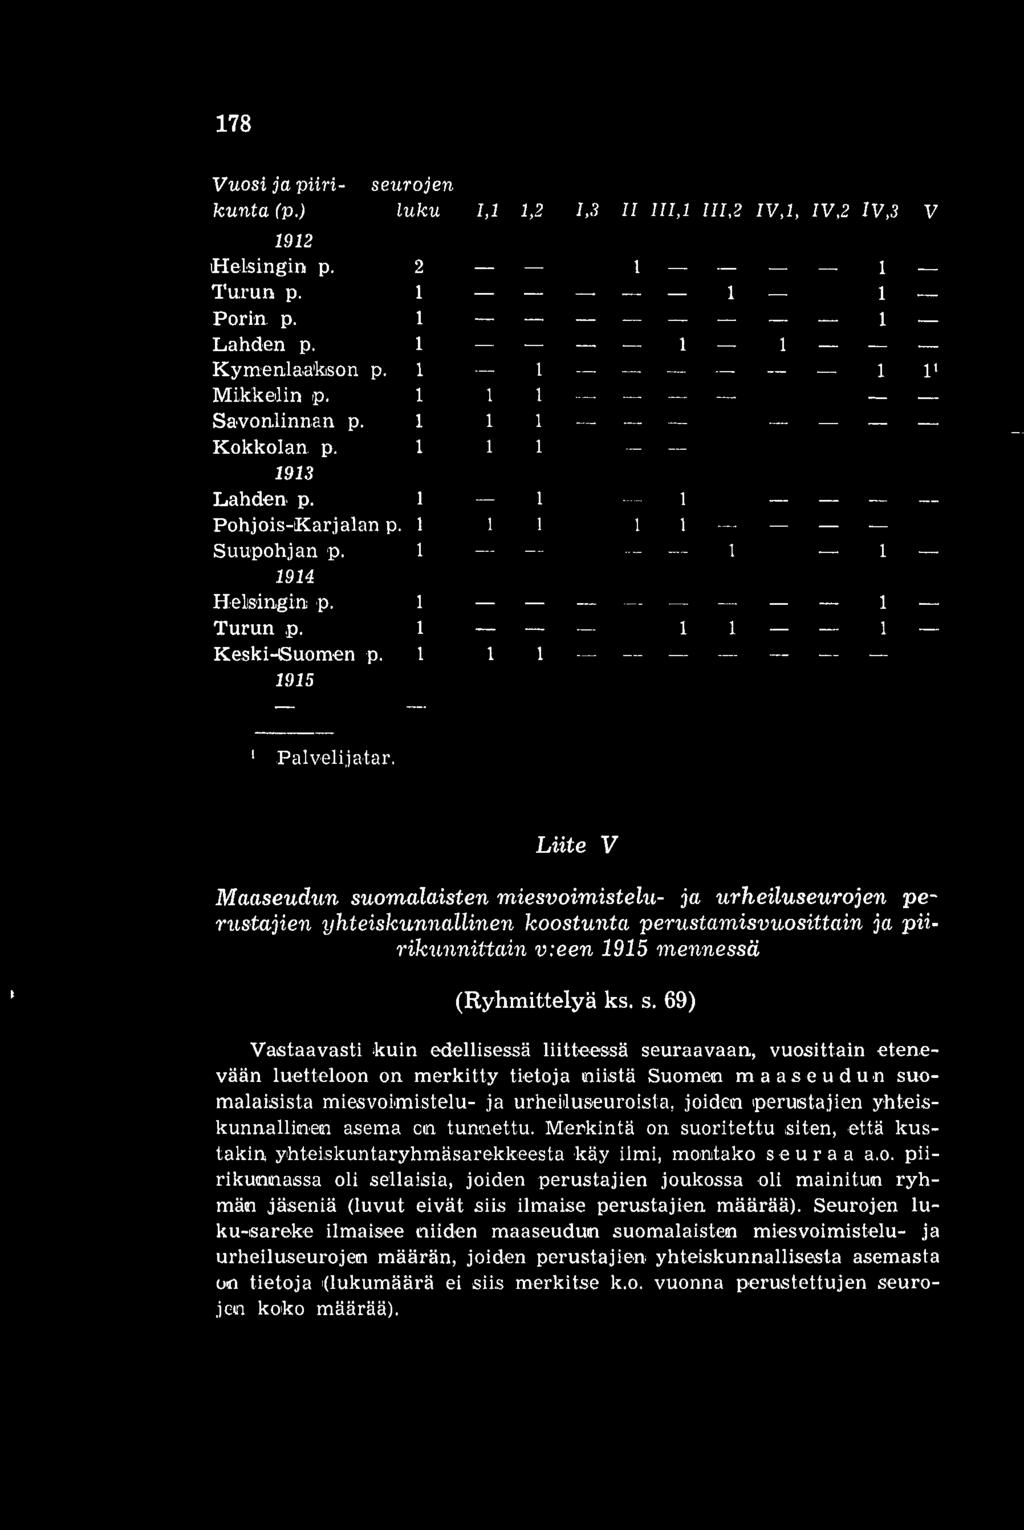 1 -- 1 1 1 Keski-suomen p. 1 1 1 -- 1915 ' Palvelijatar.